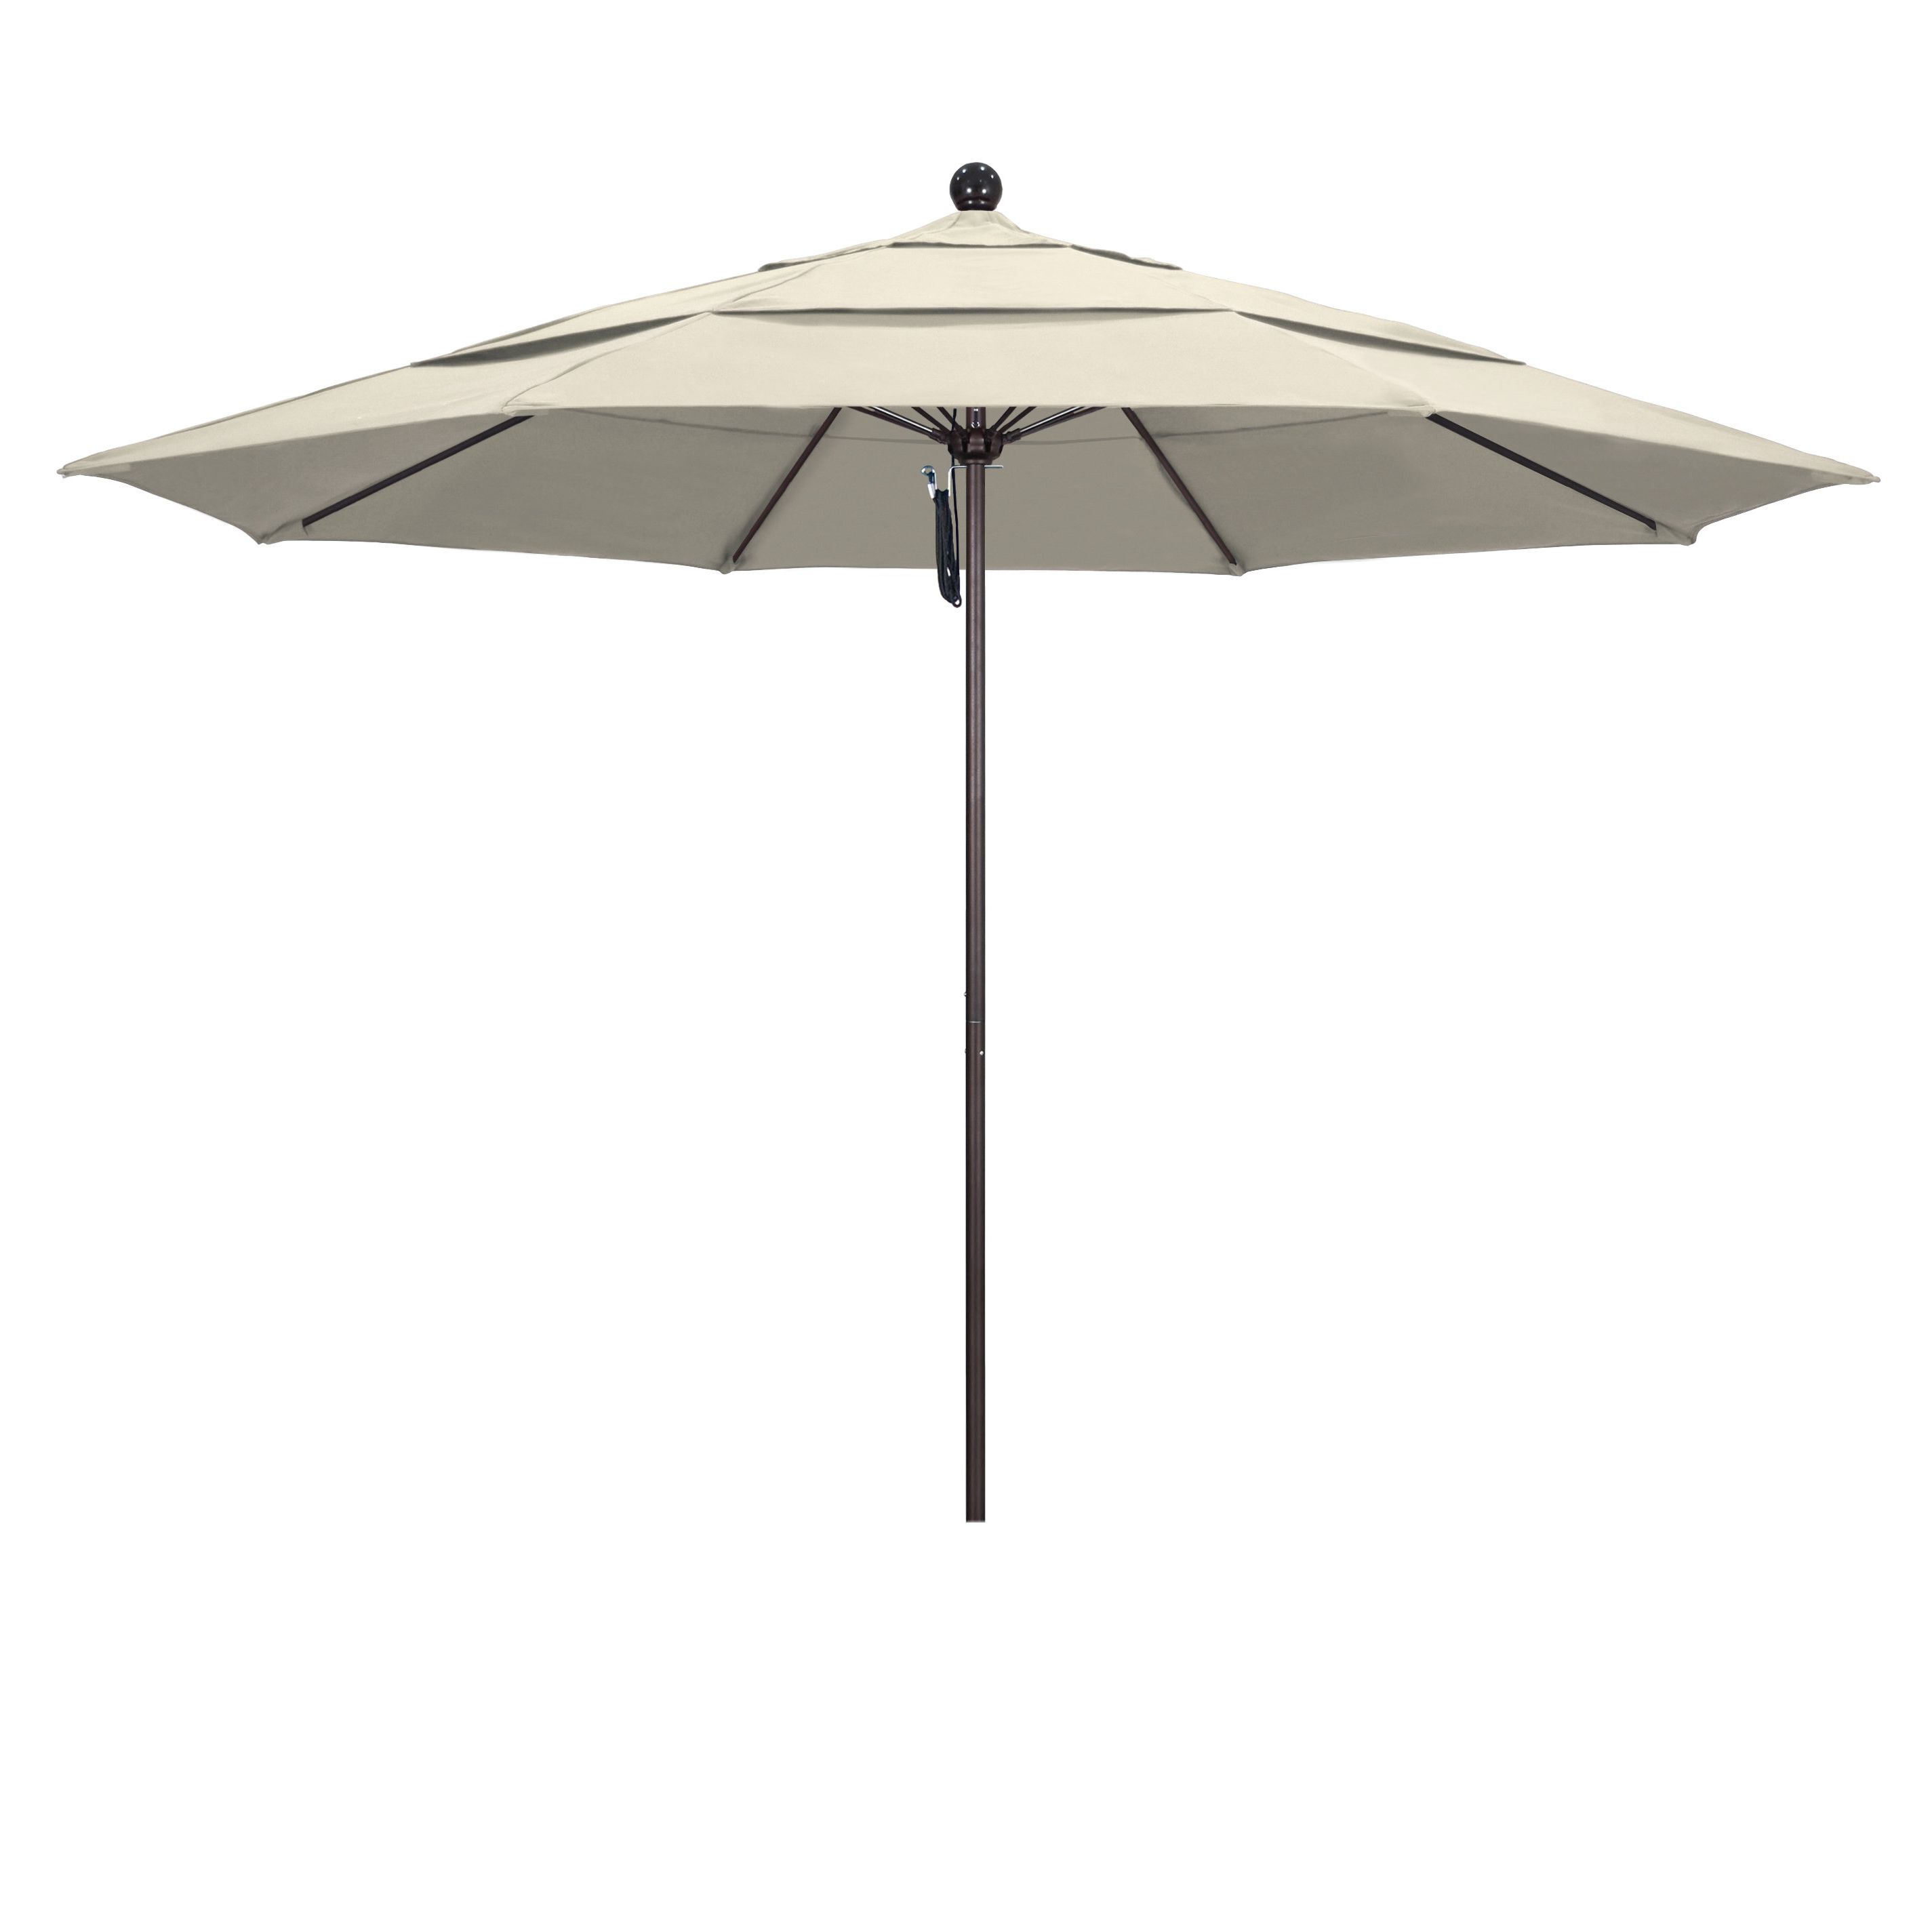 2020 Mullaney Market Umbrellas With Regard To Duxbury 11' Market Umbrella (View 18 of 20)